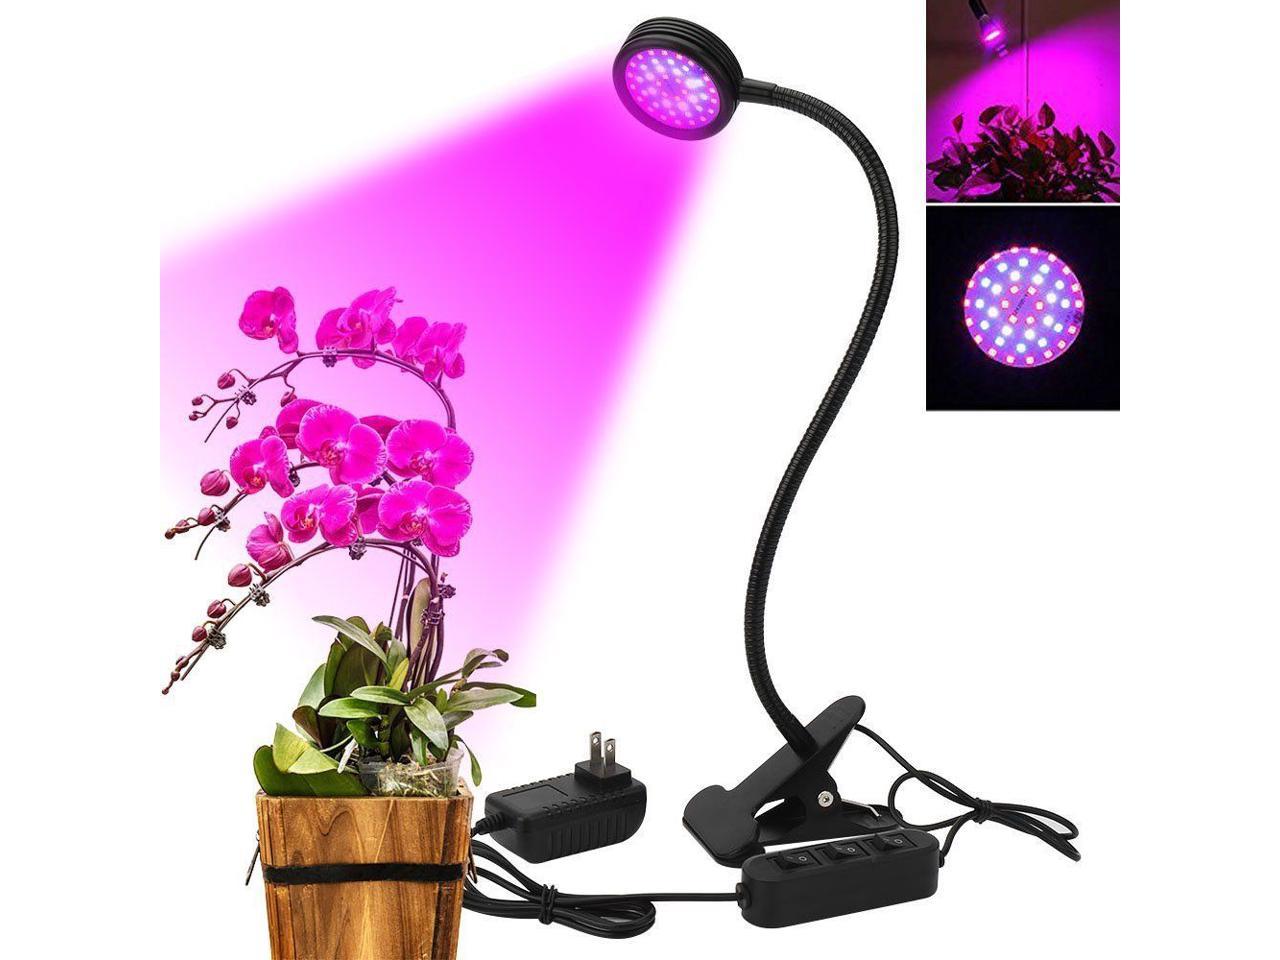 Details about   USB LED Grow Light Hydroponic Full Spectrum Indoor Desktop Flower Plant Lamp 